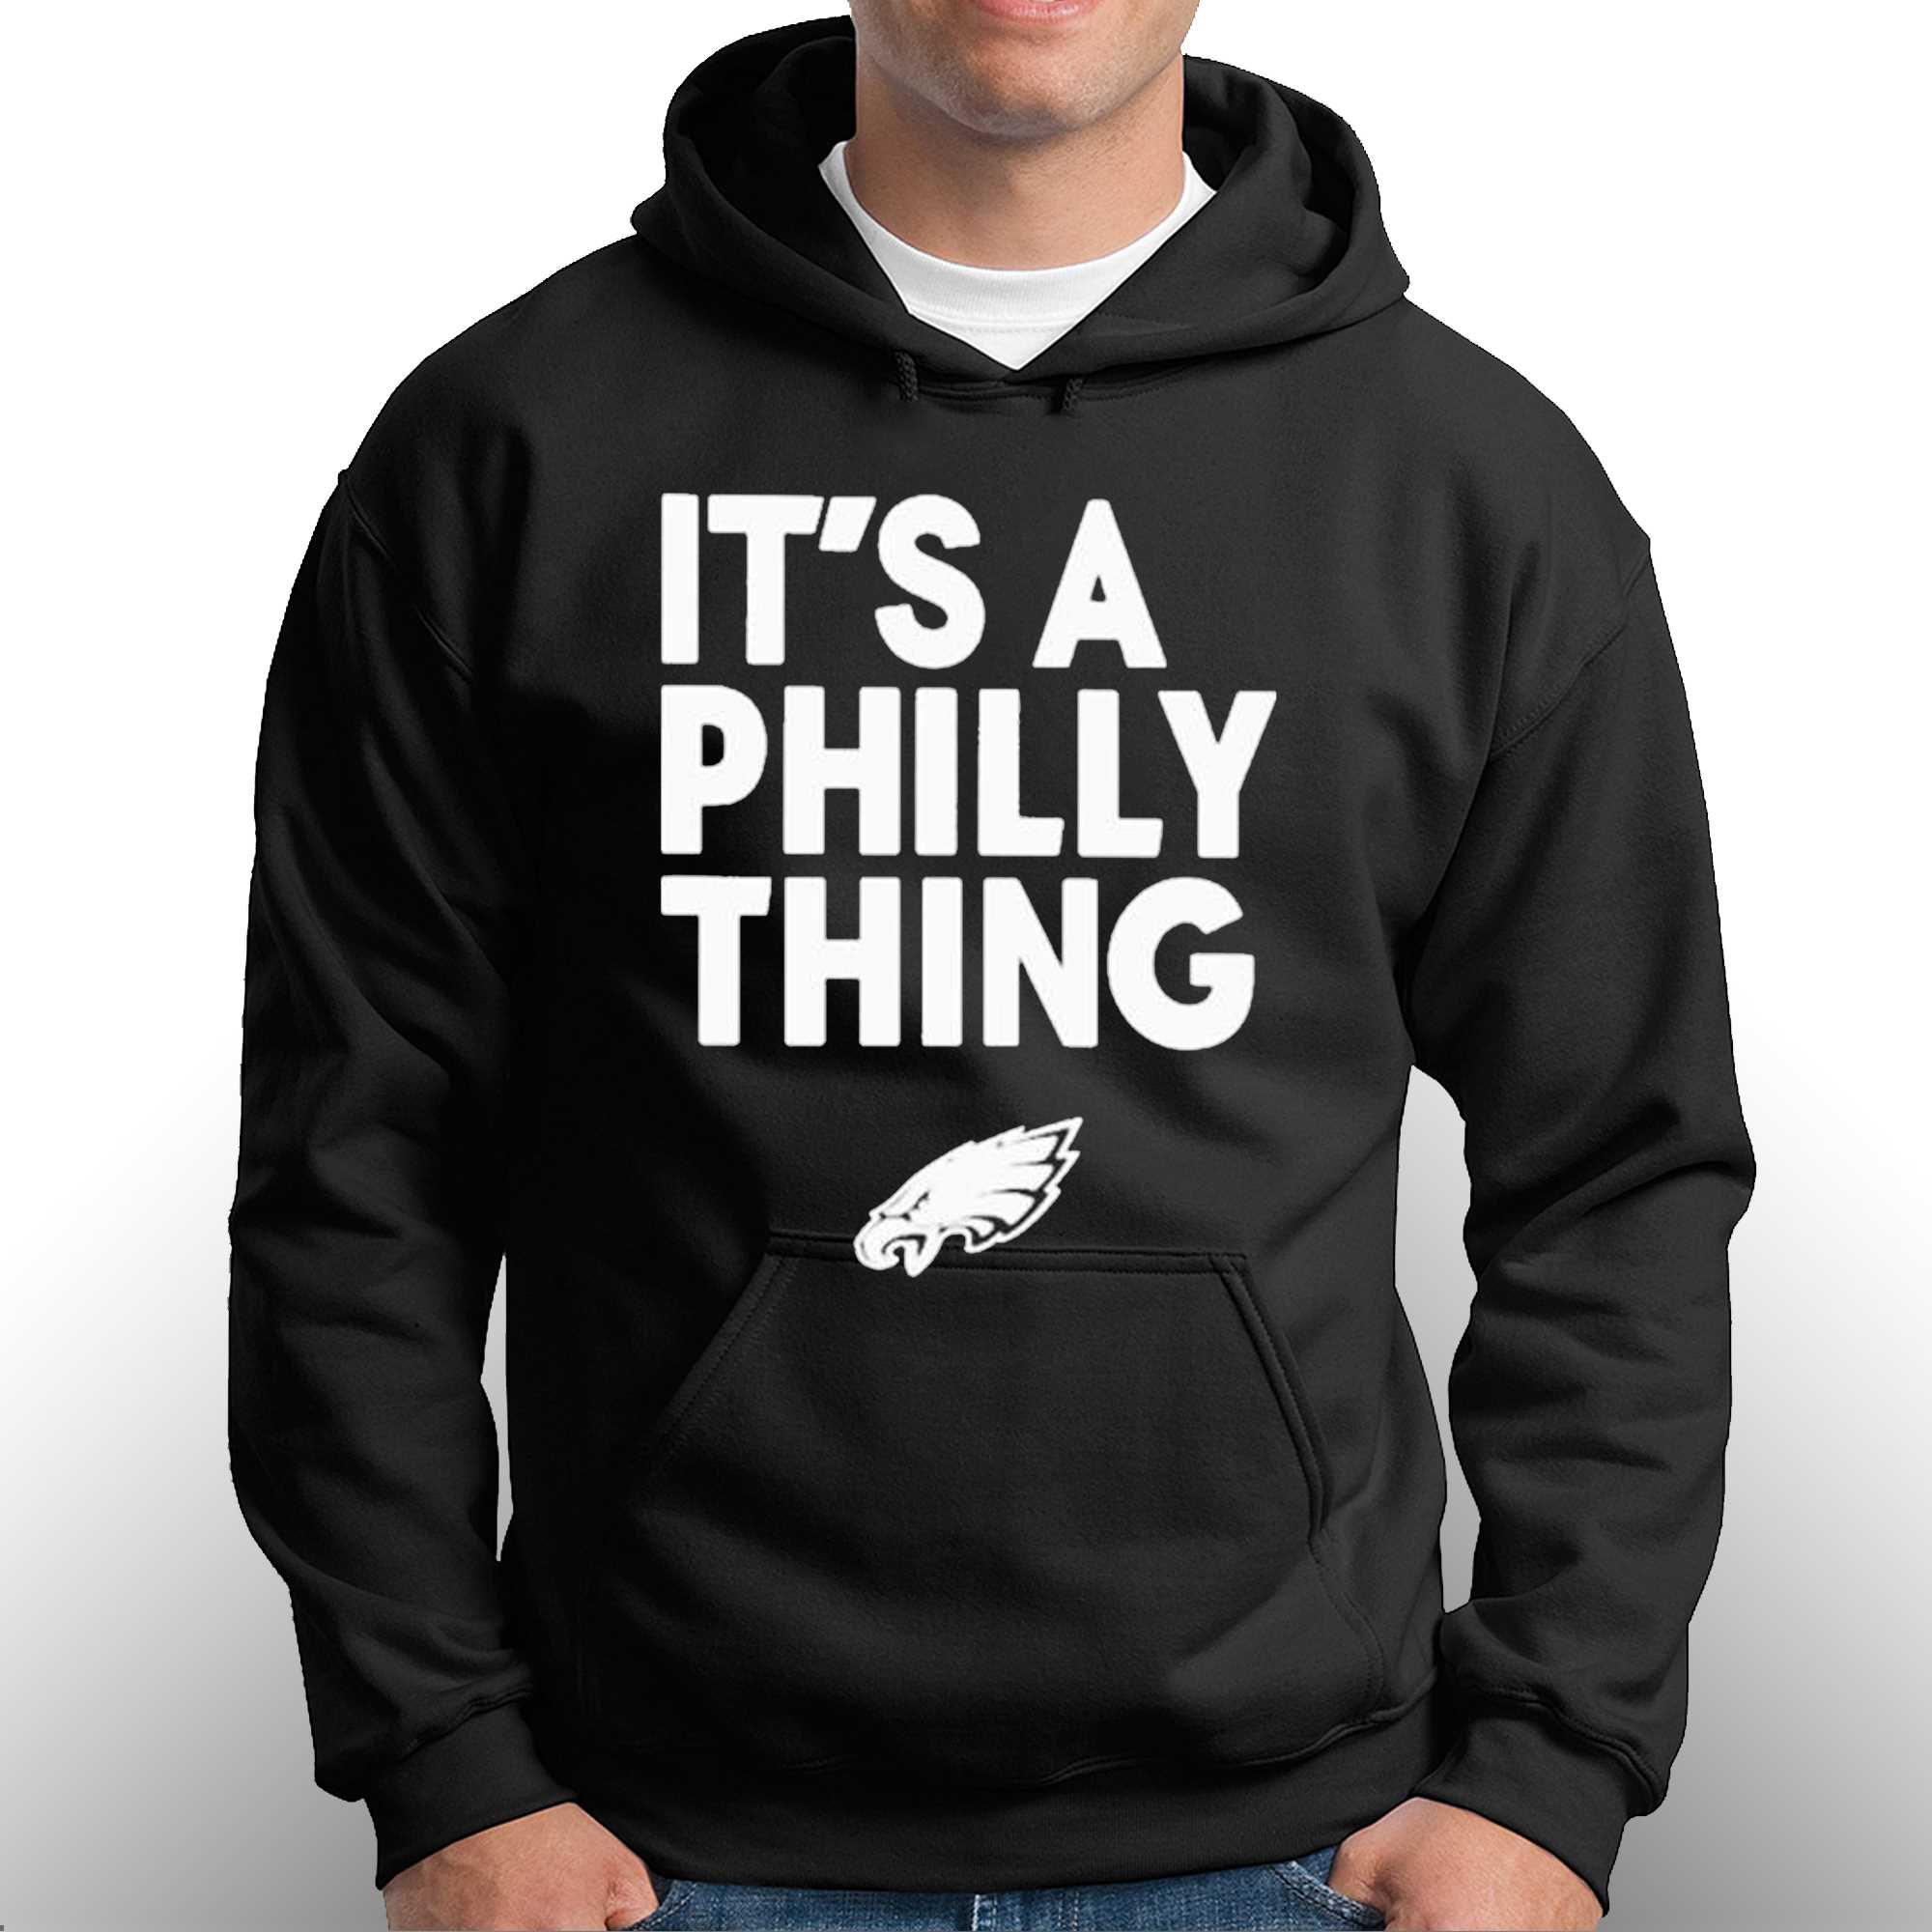 Original It's a Philly thing Philadelphia Eagles white t-shirt